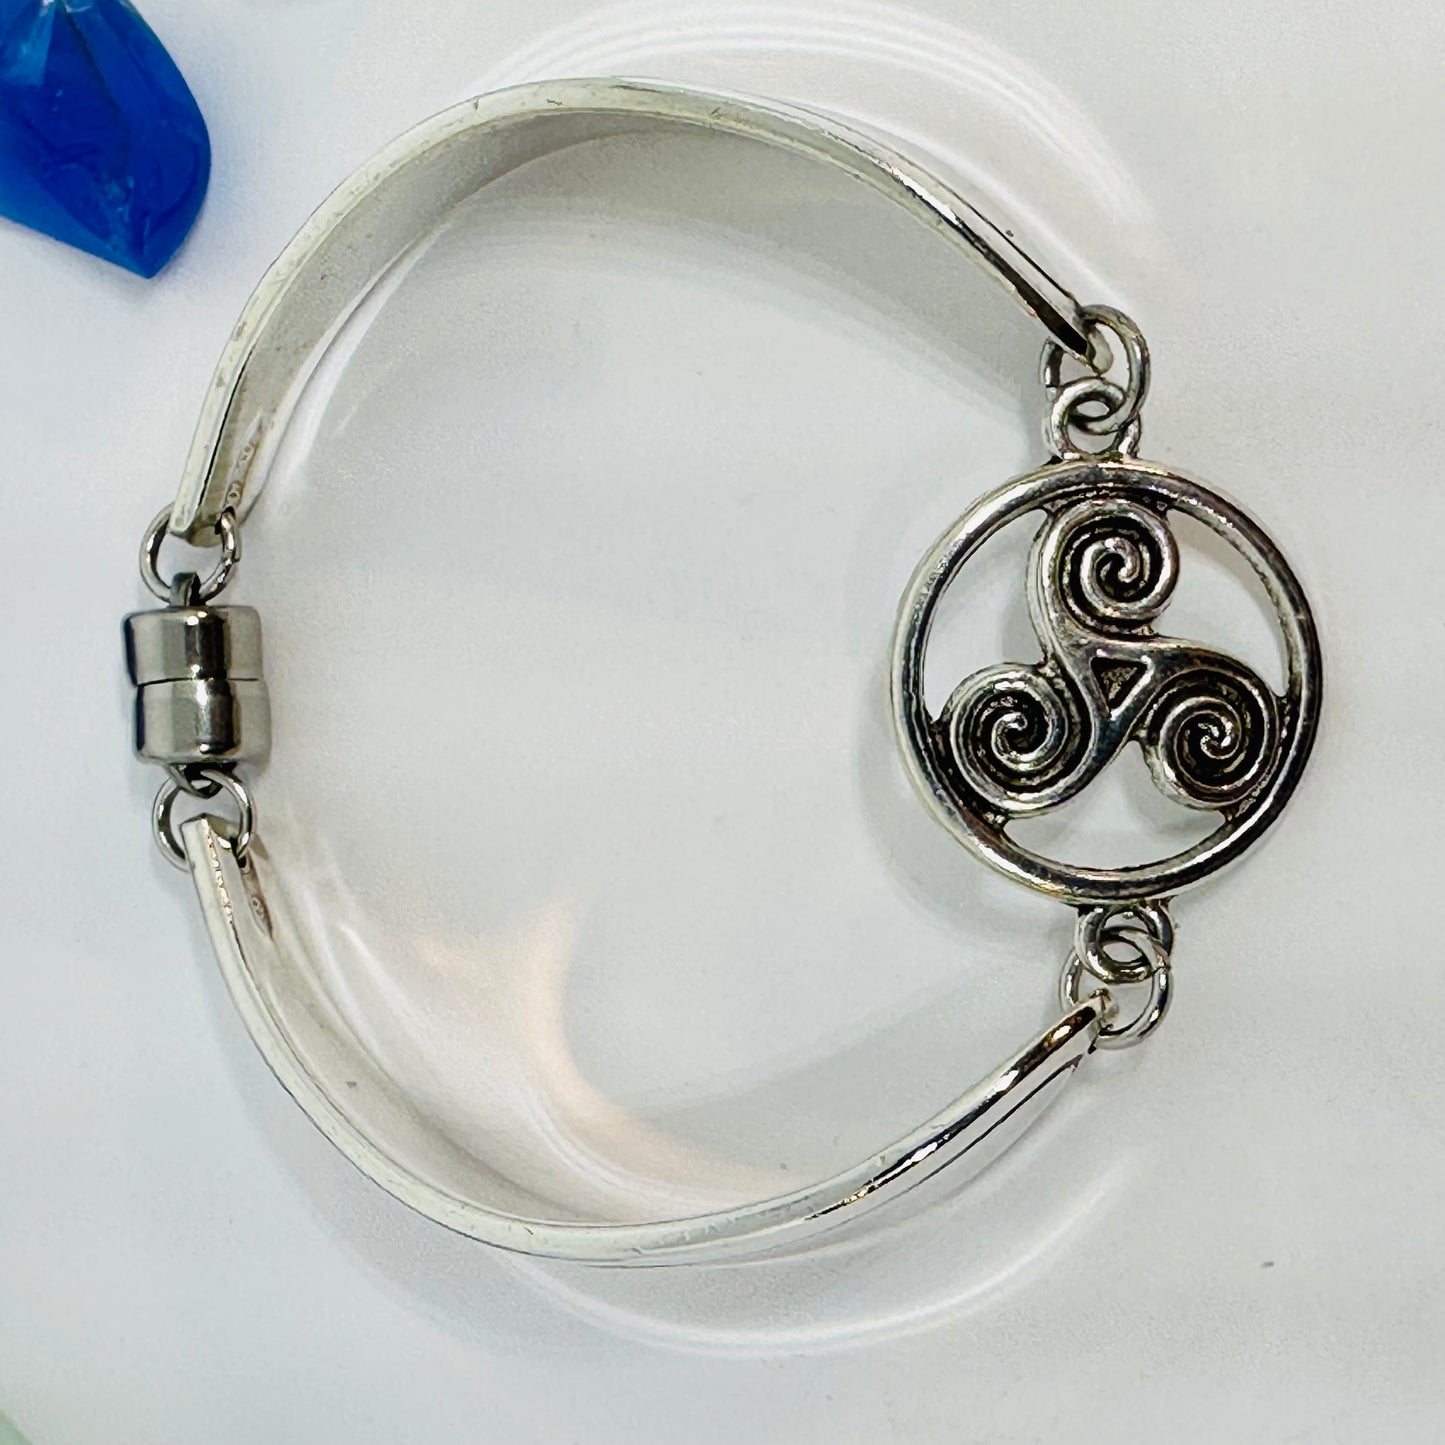 “Reverie” with Celtic Charm - 1937 Spoon Bracelet | Vintage Silverware | Up-Cycled Antique Silverware Spoon Bracelet